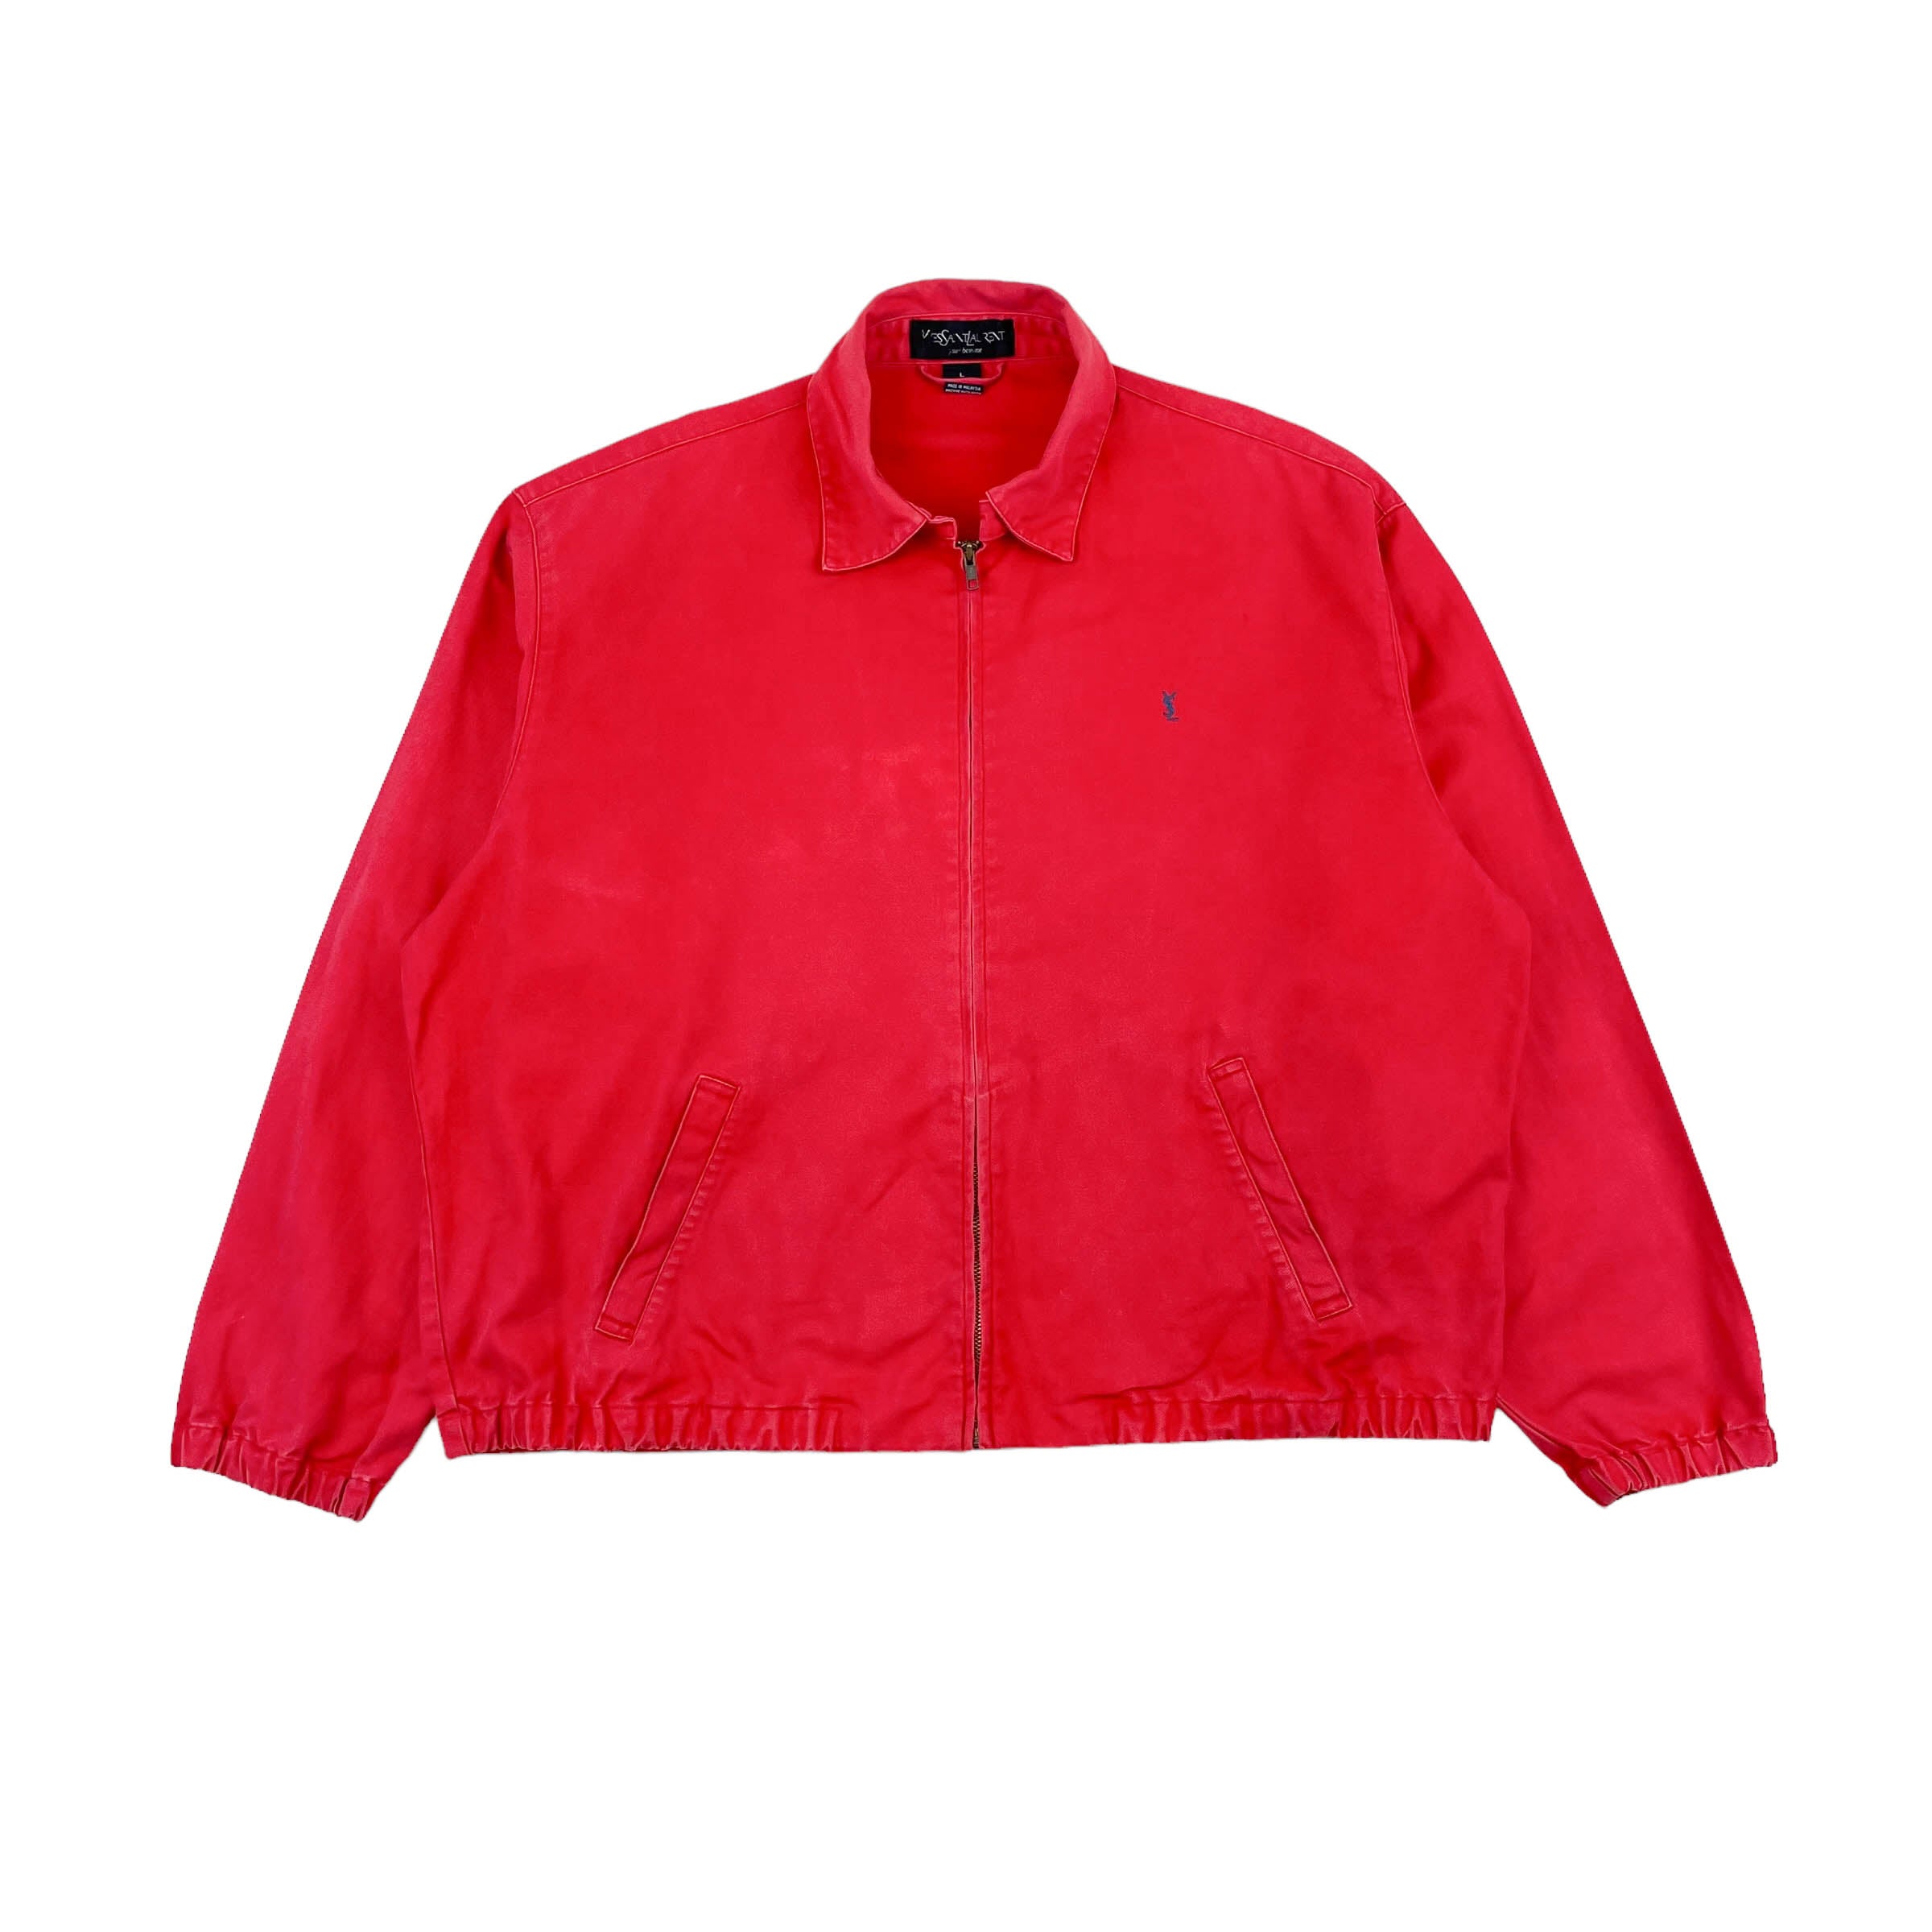 Vintage YSL Yves Saint Laurent Harrington jacket size S - second